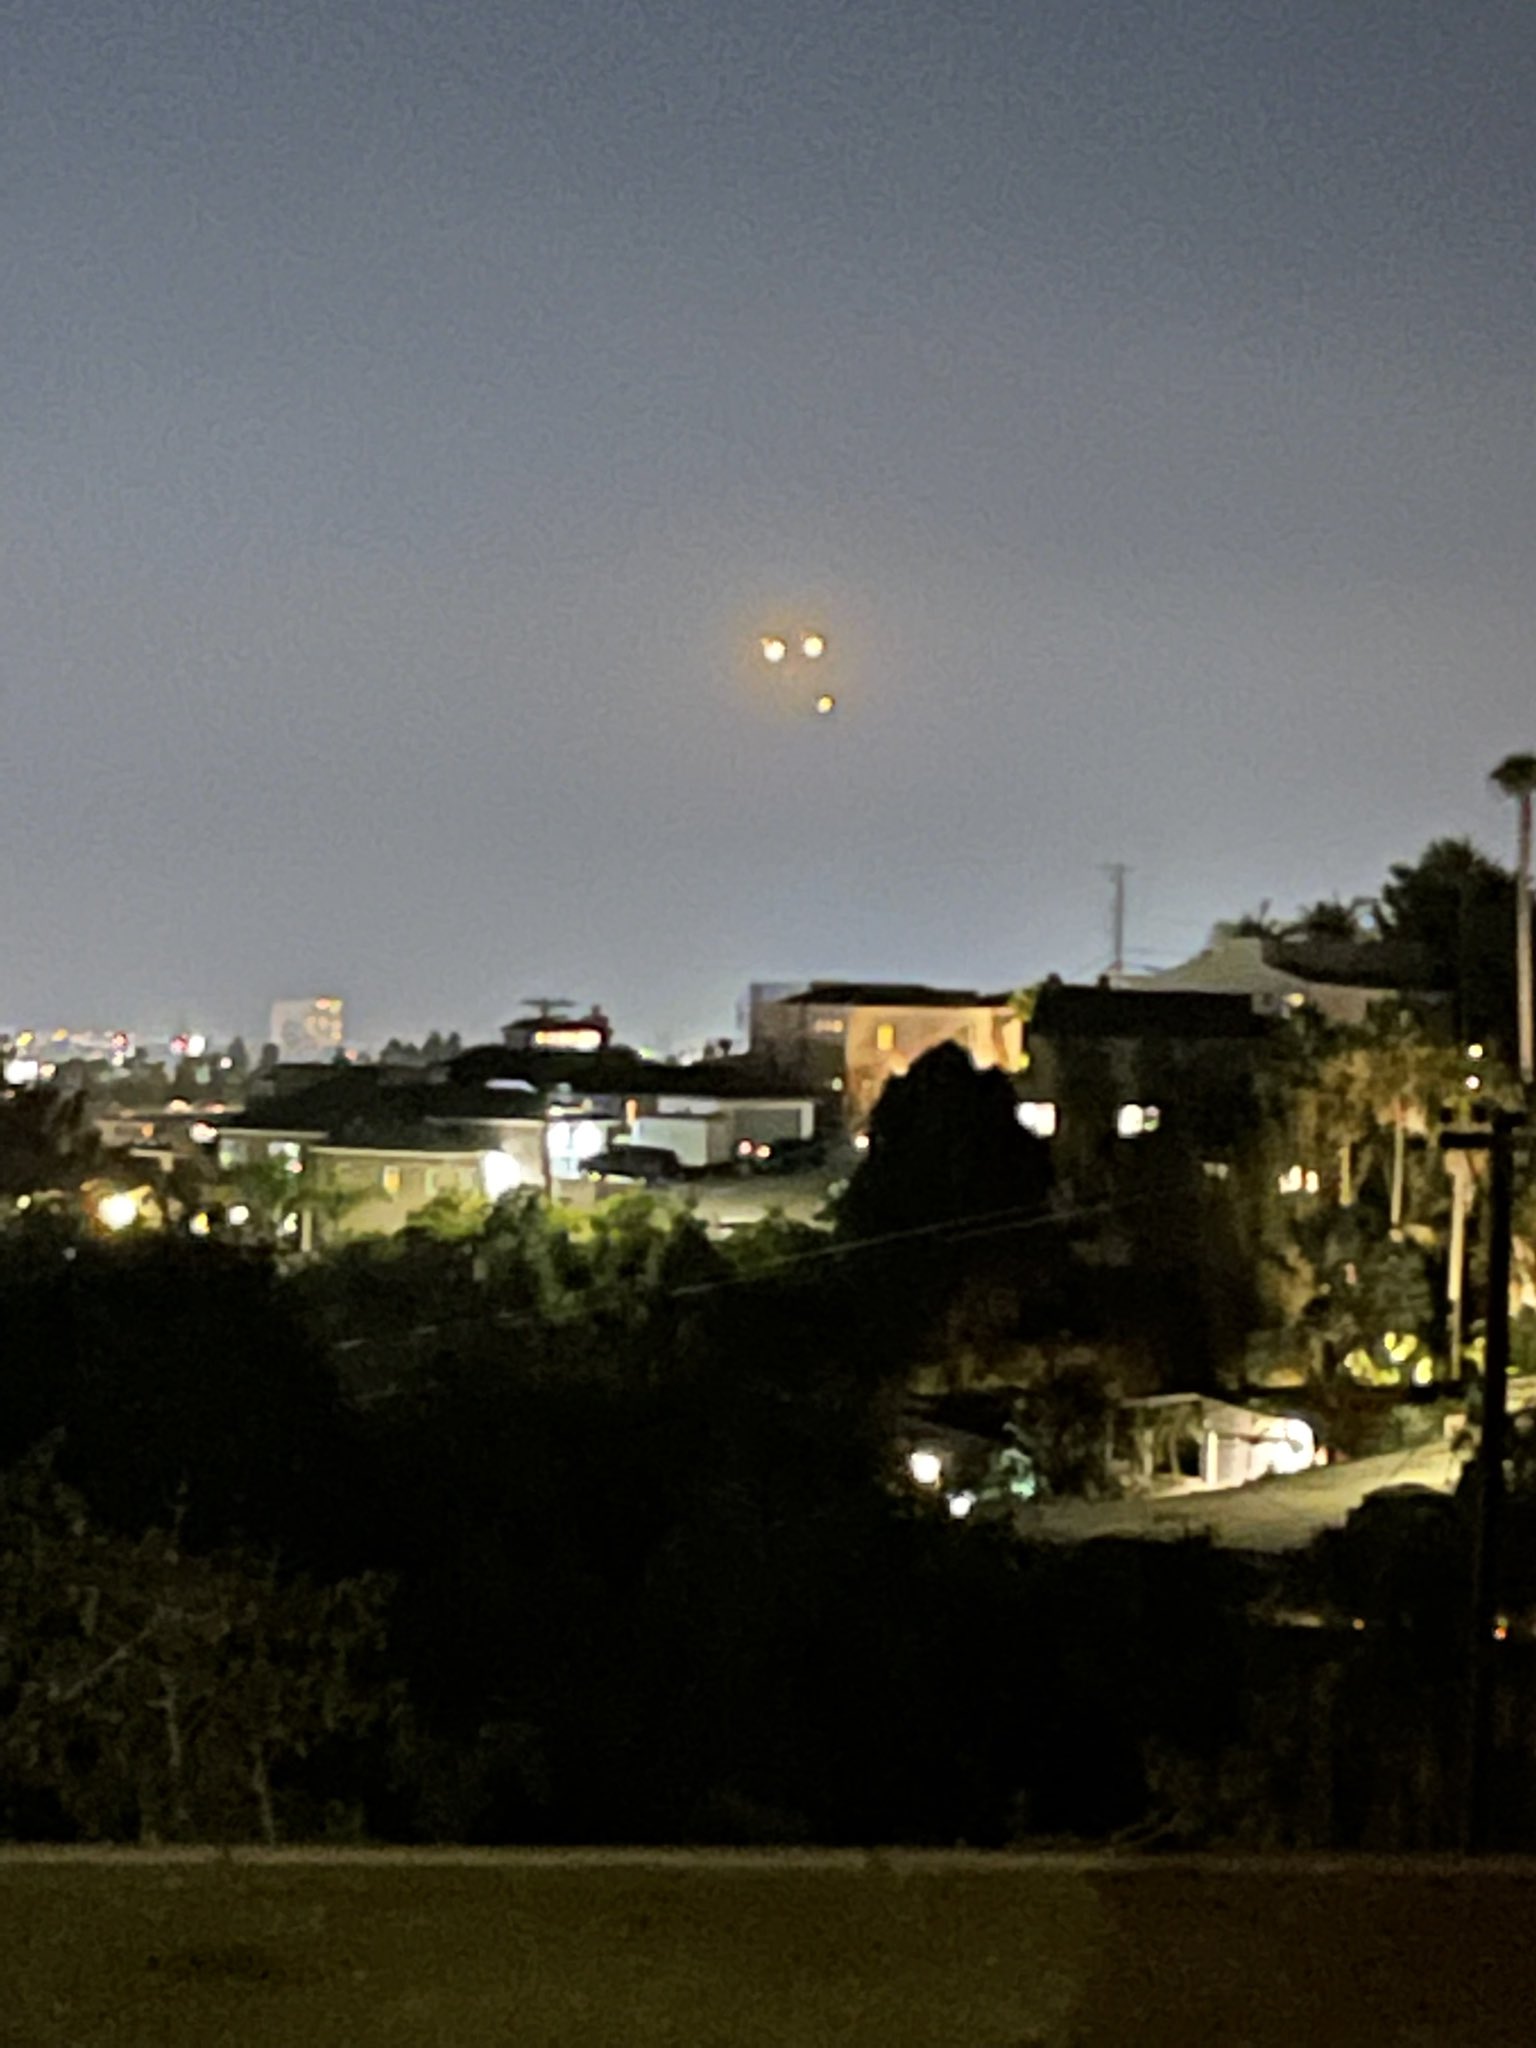 UFO event San Diego last night FWUIti4UcAI0VeP?format=jpg&name=large